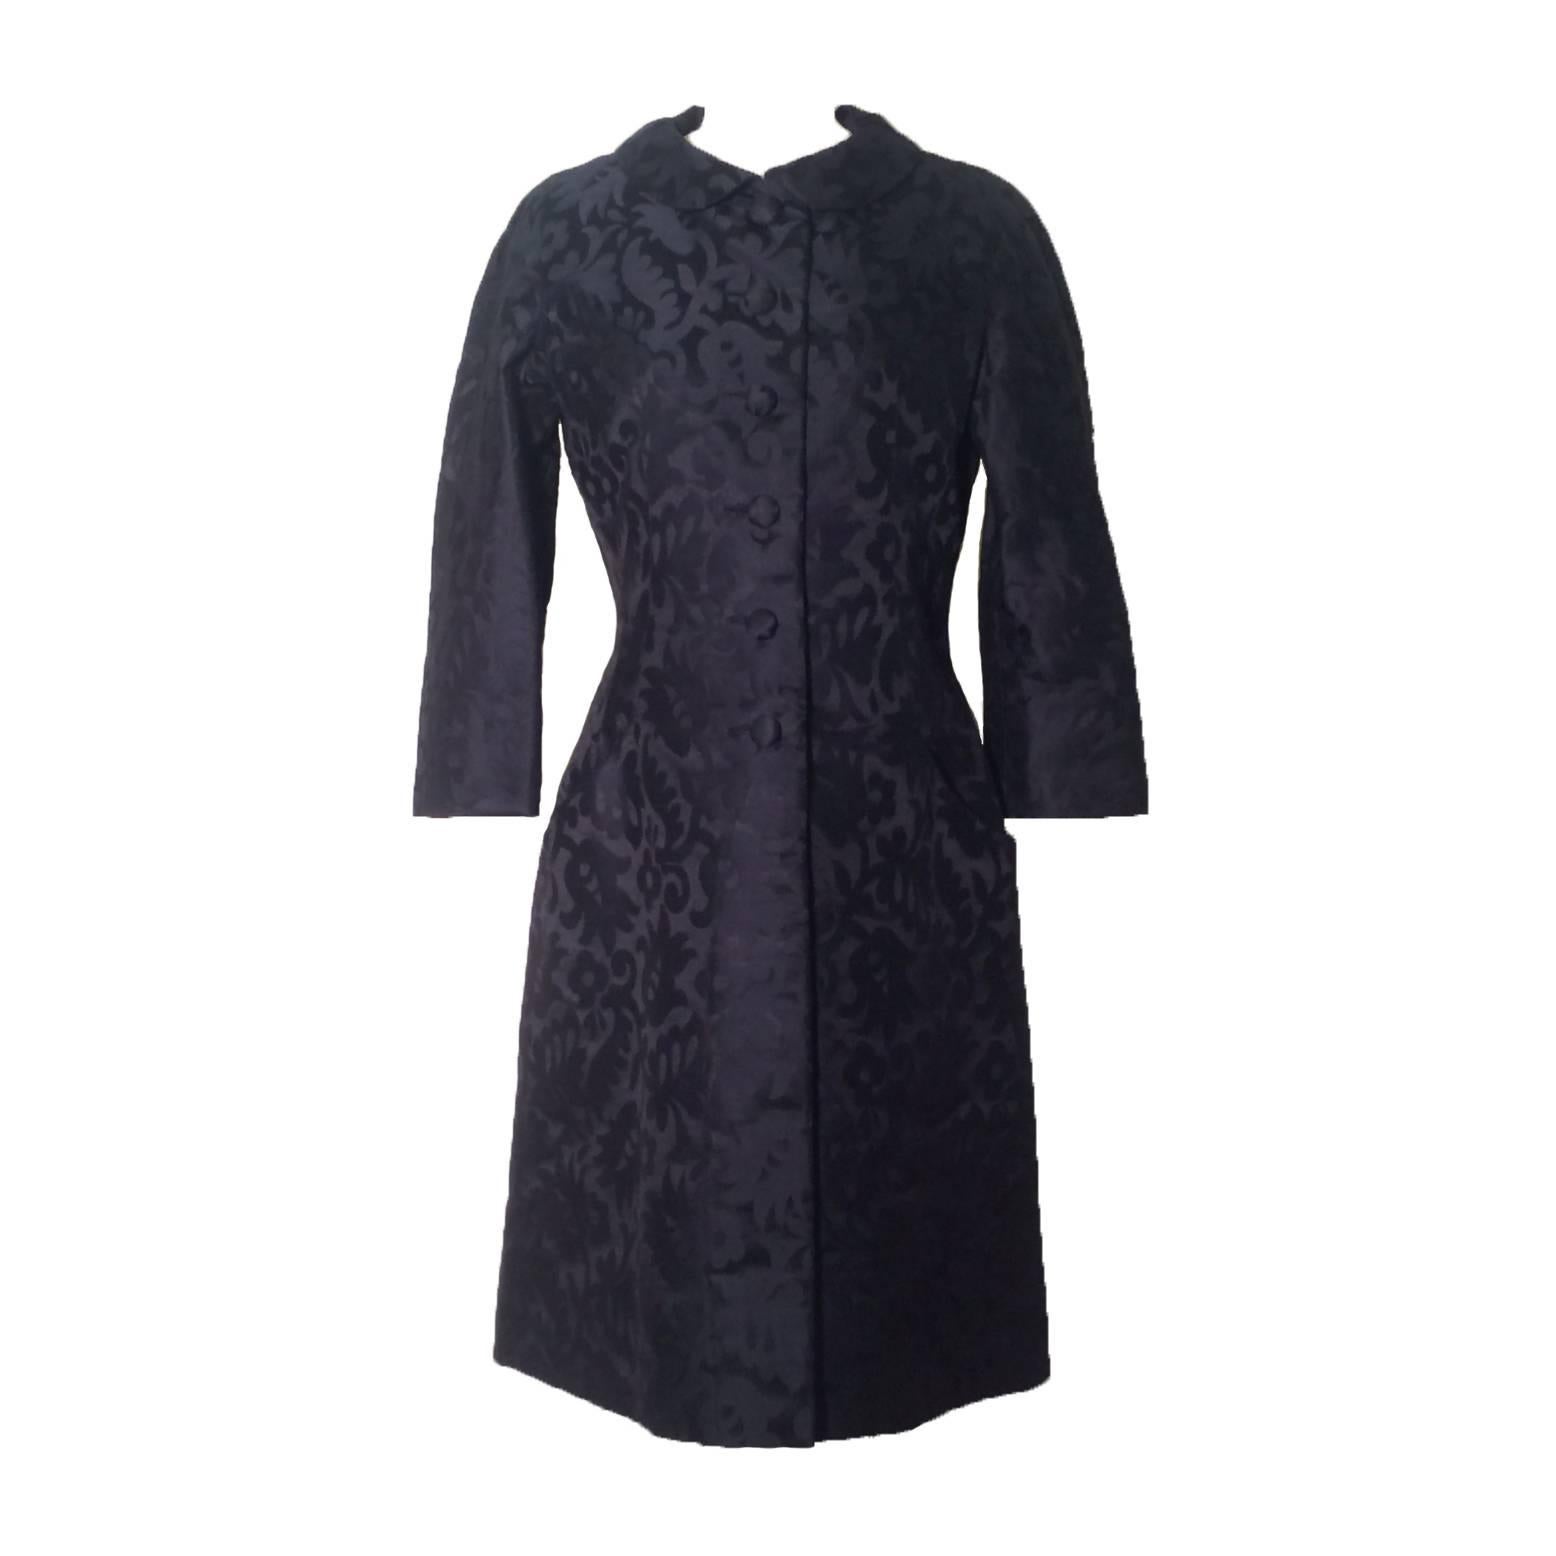 Hattie Carnegie 50s/60s Black Floral Silk Jacquard Coat Dress